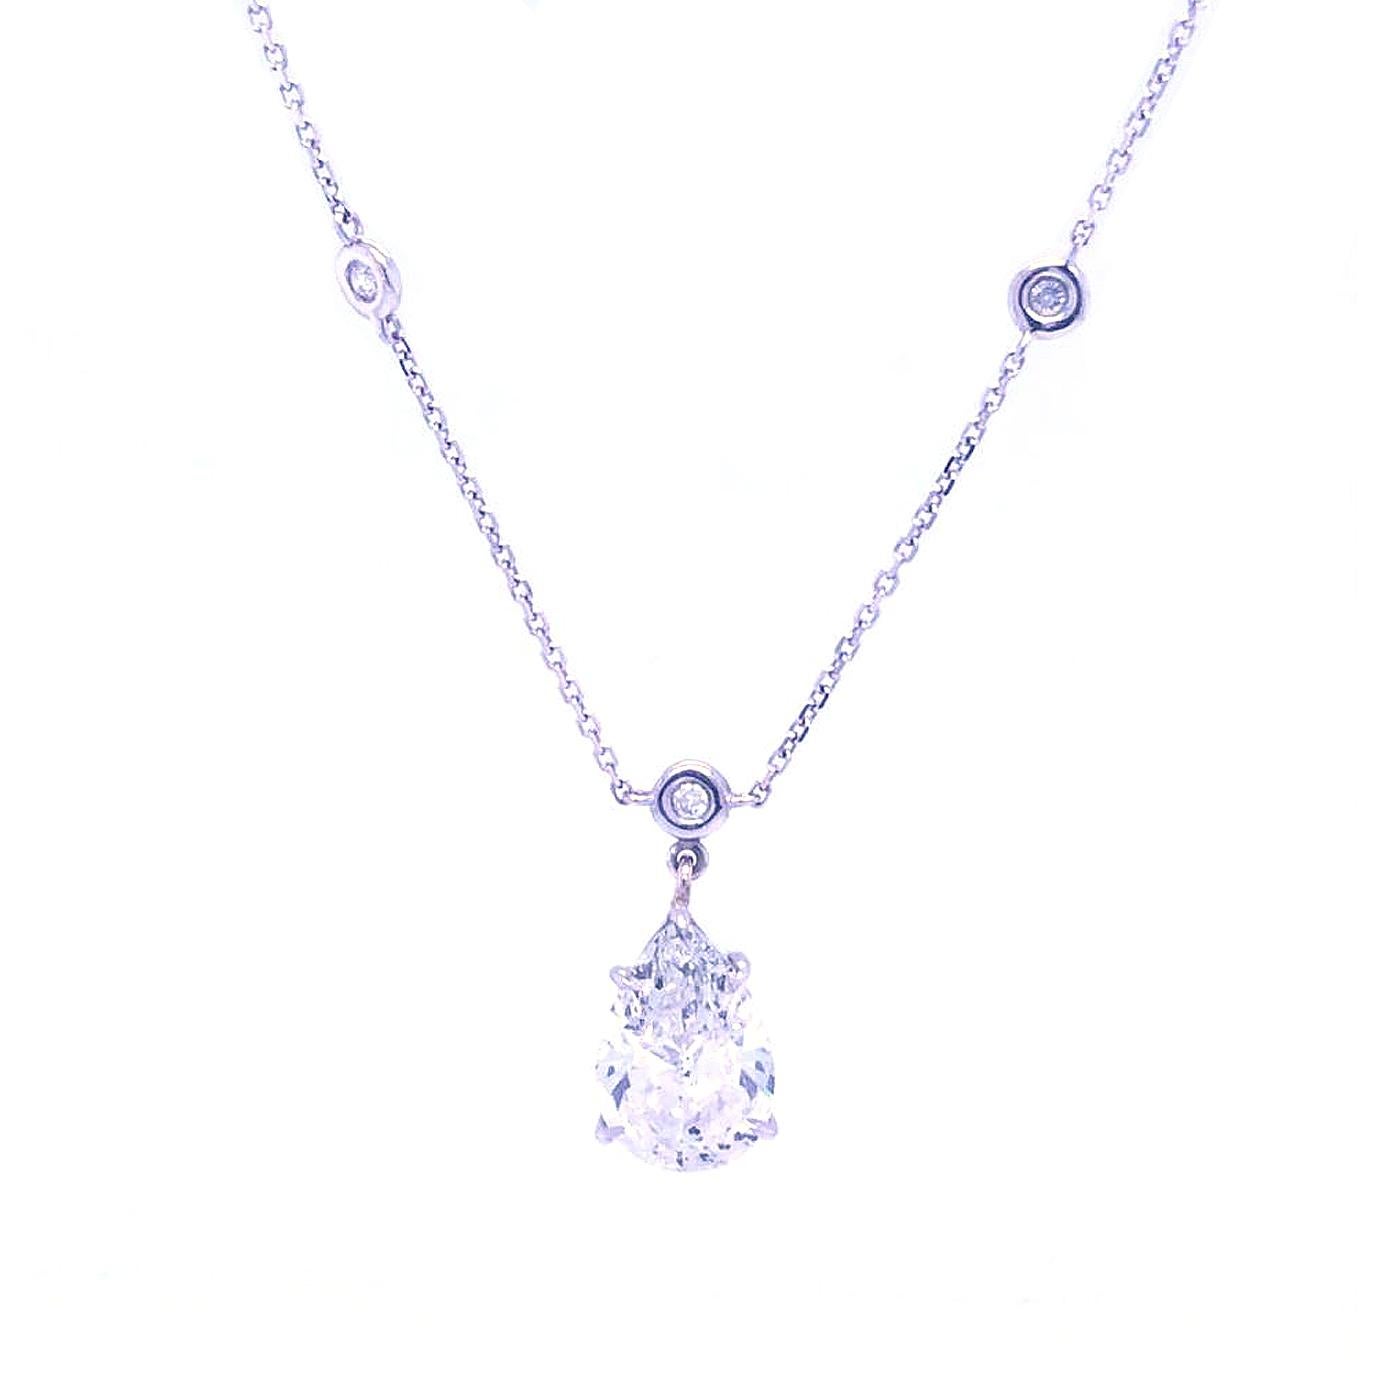 Modernist Pear Shape Diamond Link Chain Necklace Pendant Dangling 14K White Gold 2.65ct 4g